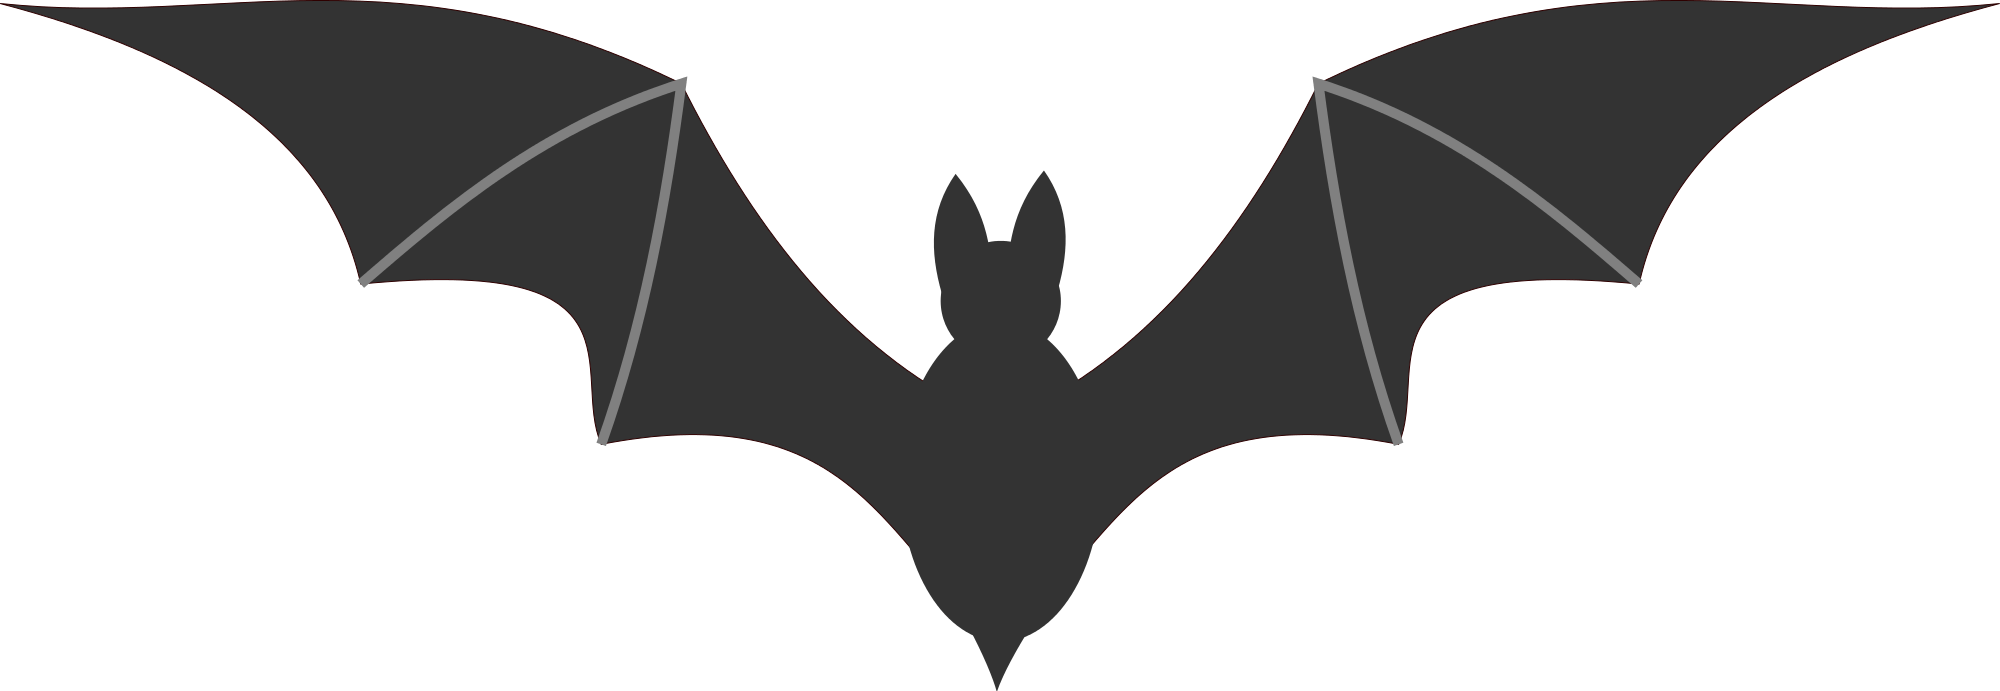 Gray Bat Logo - Bat icon.svg